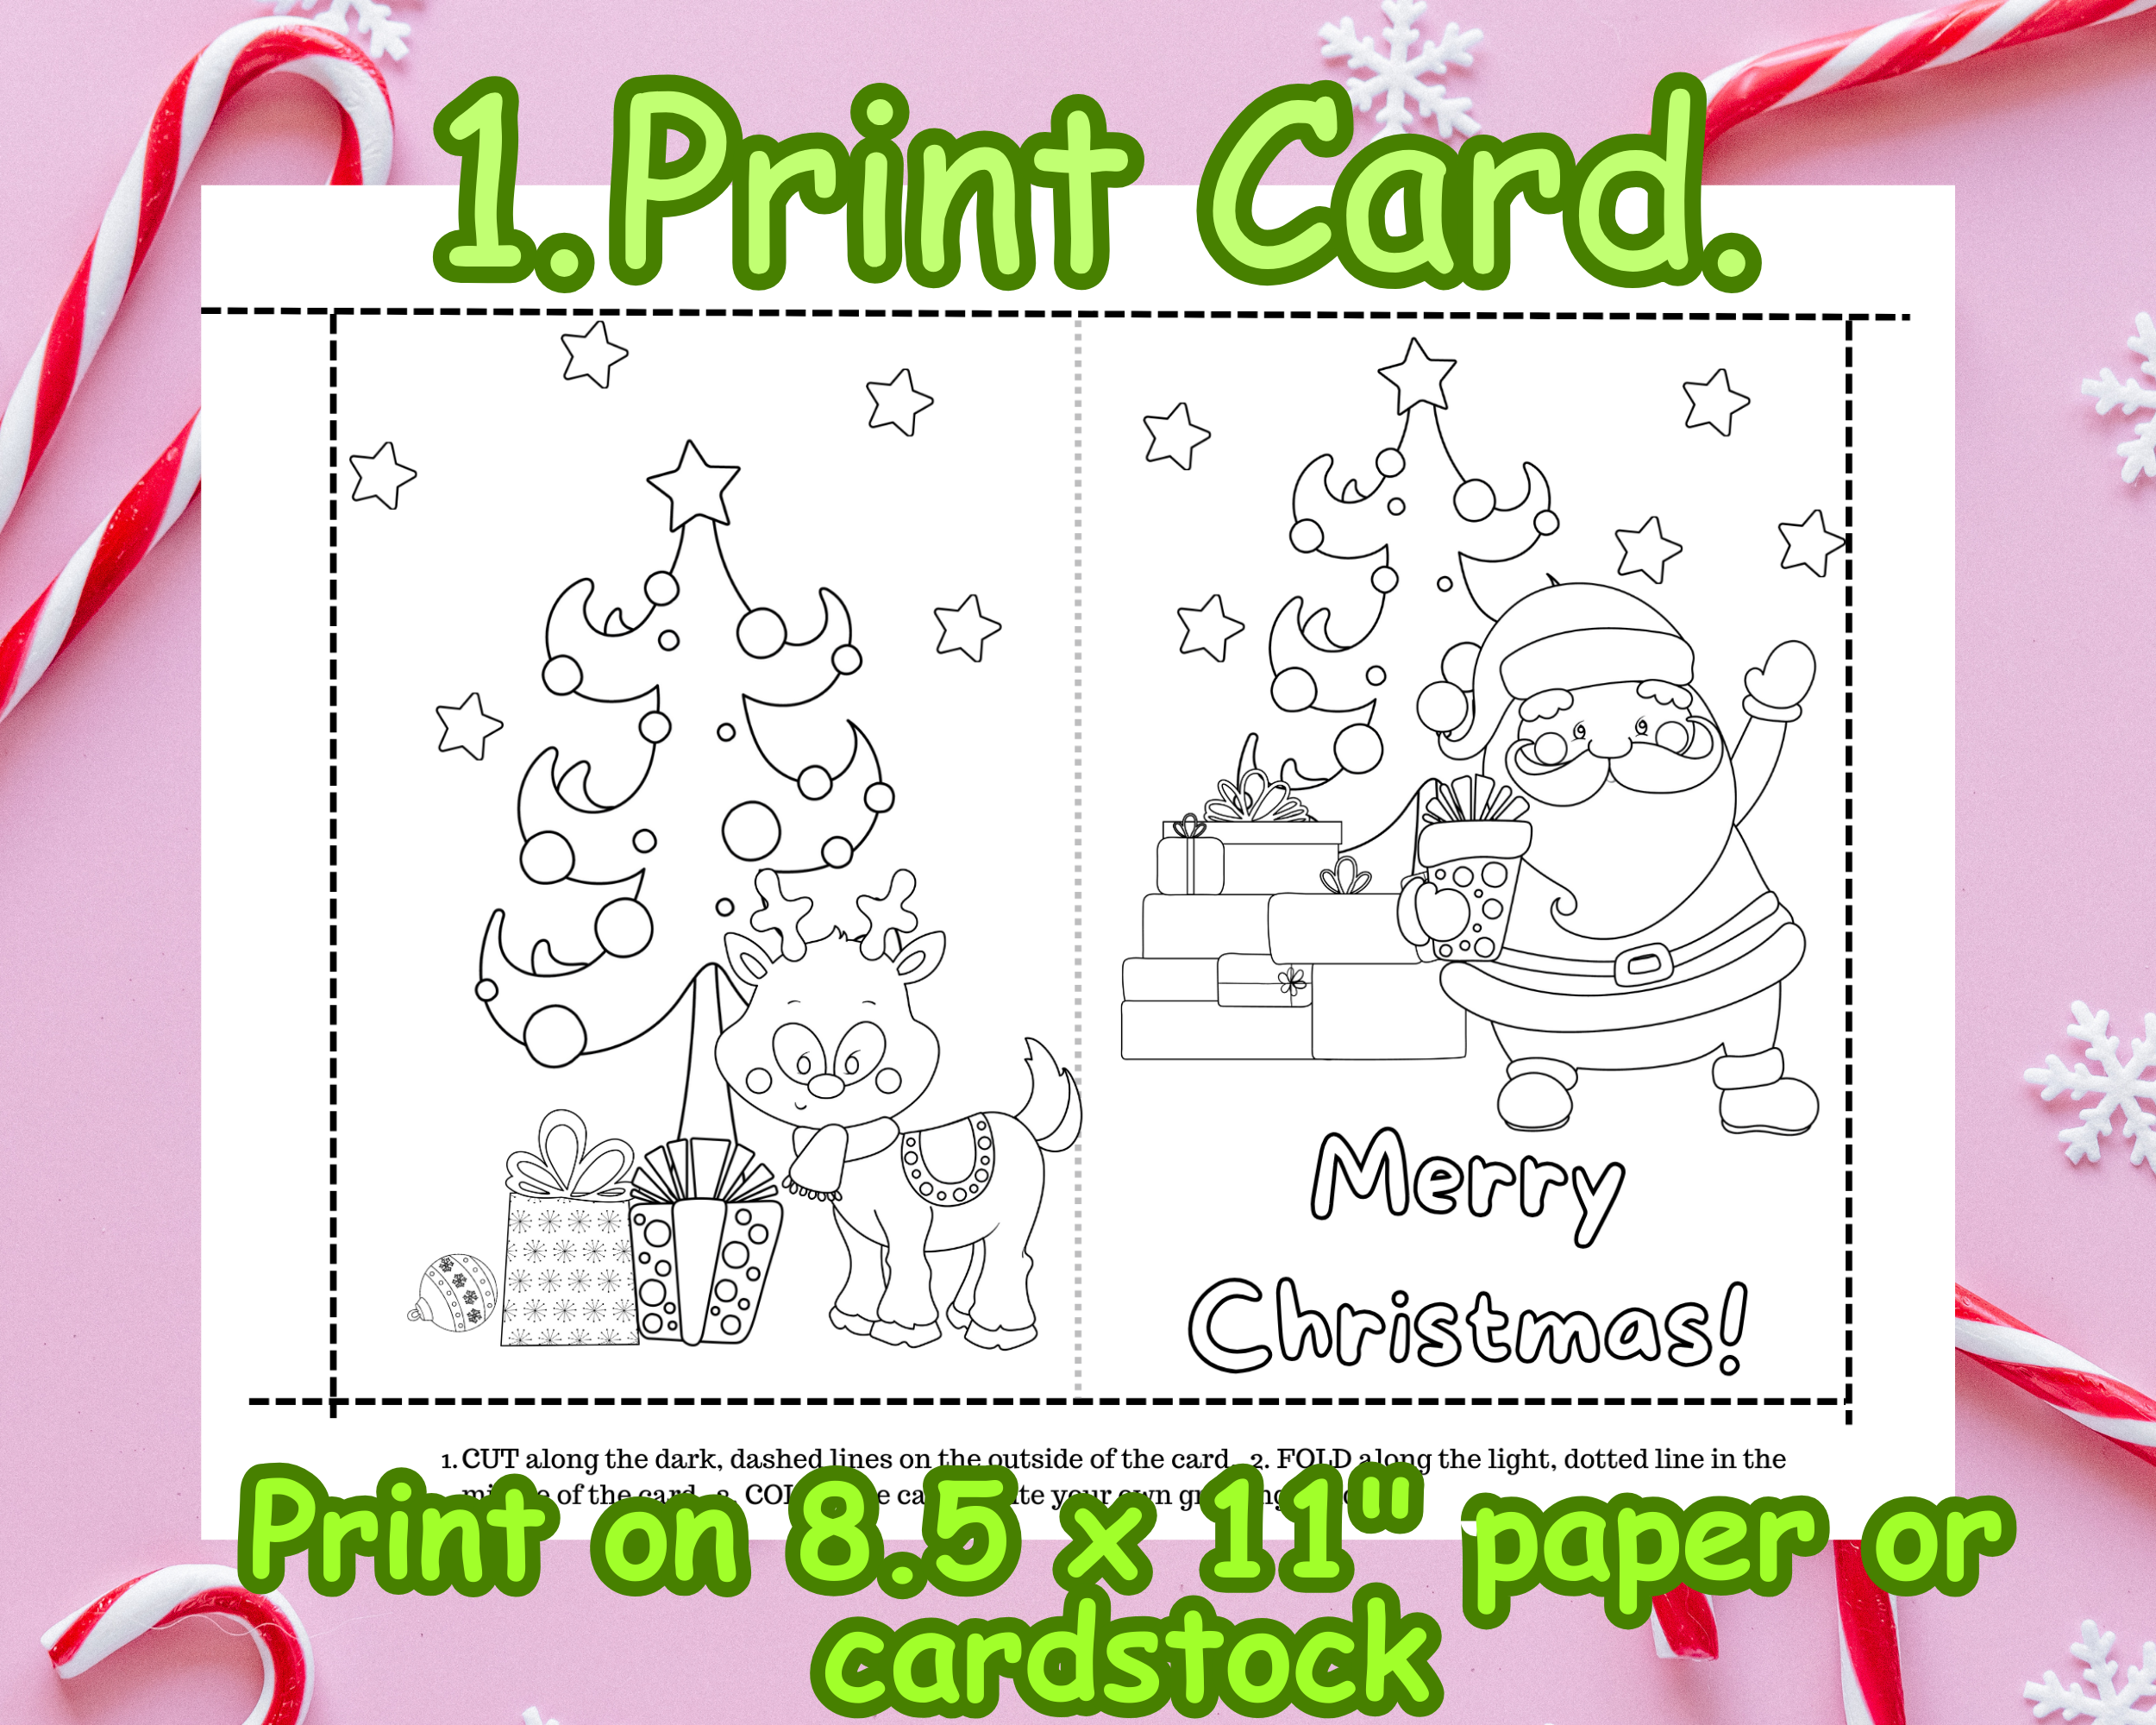 Printable Coloring 5x7 Merry Christmas Card, Santa and Reindeer, digital download 1. Print Card.